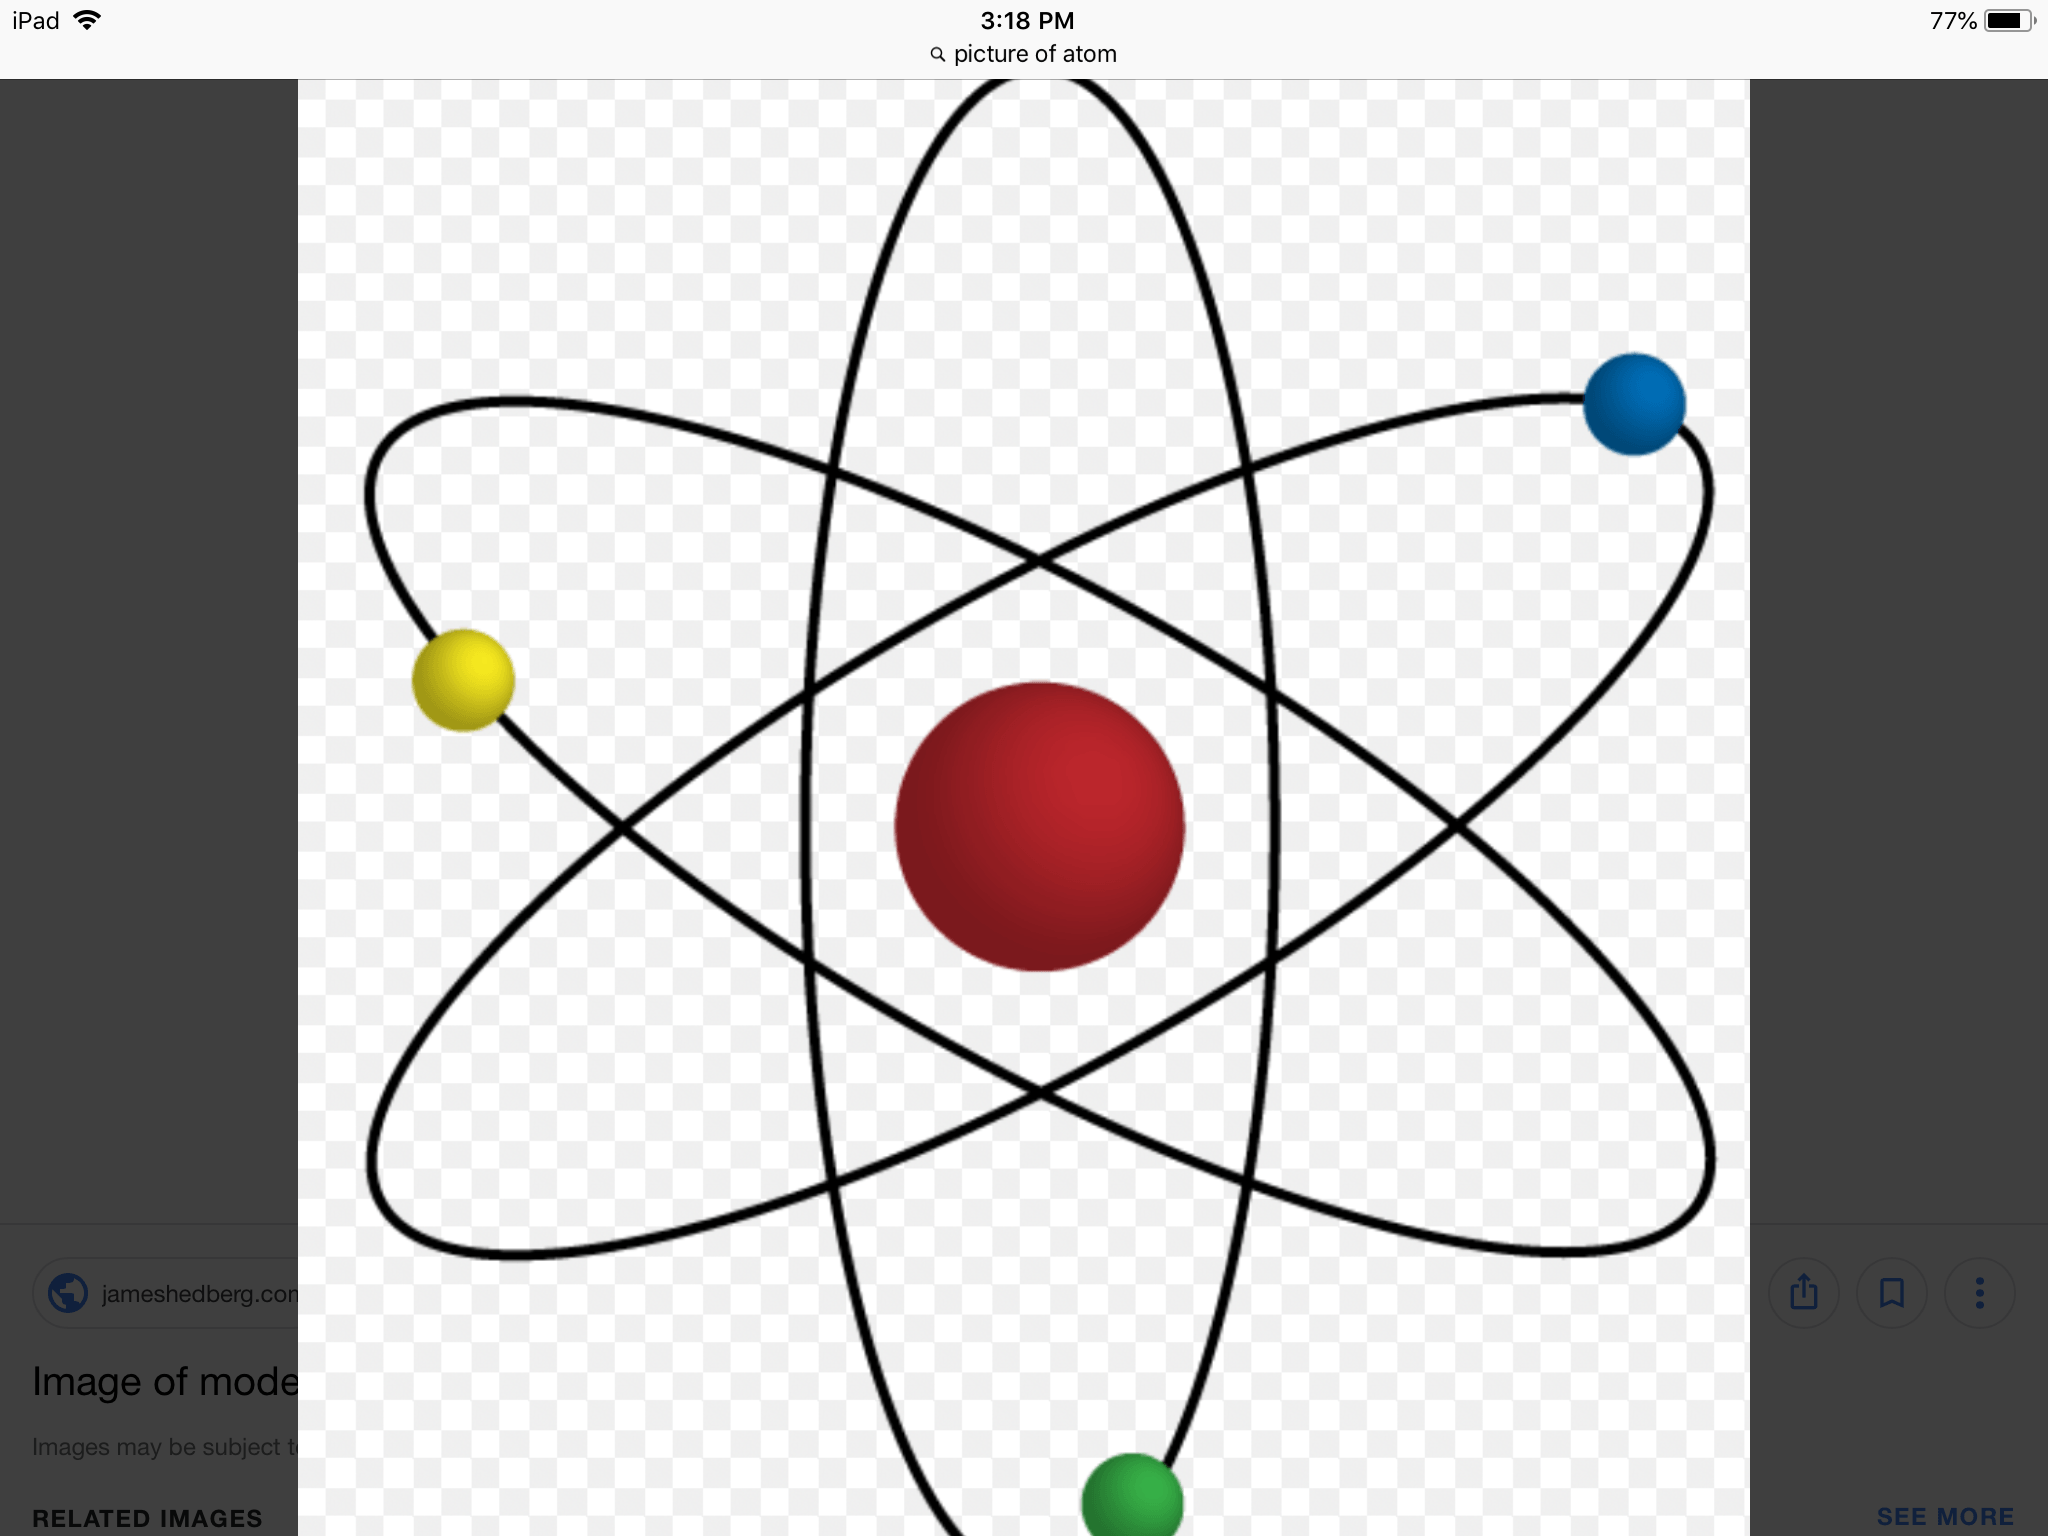 Атом атомы. Модель молекулы Резерфорда. Модель молекулы атома Резерфорд. Атом молекулы ядерная модель. Атомное ядро Резерфорд рисунок.